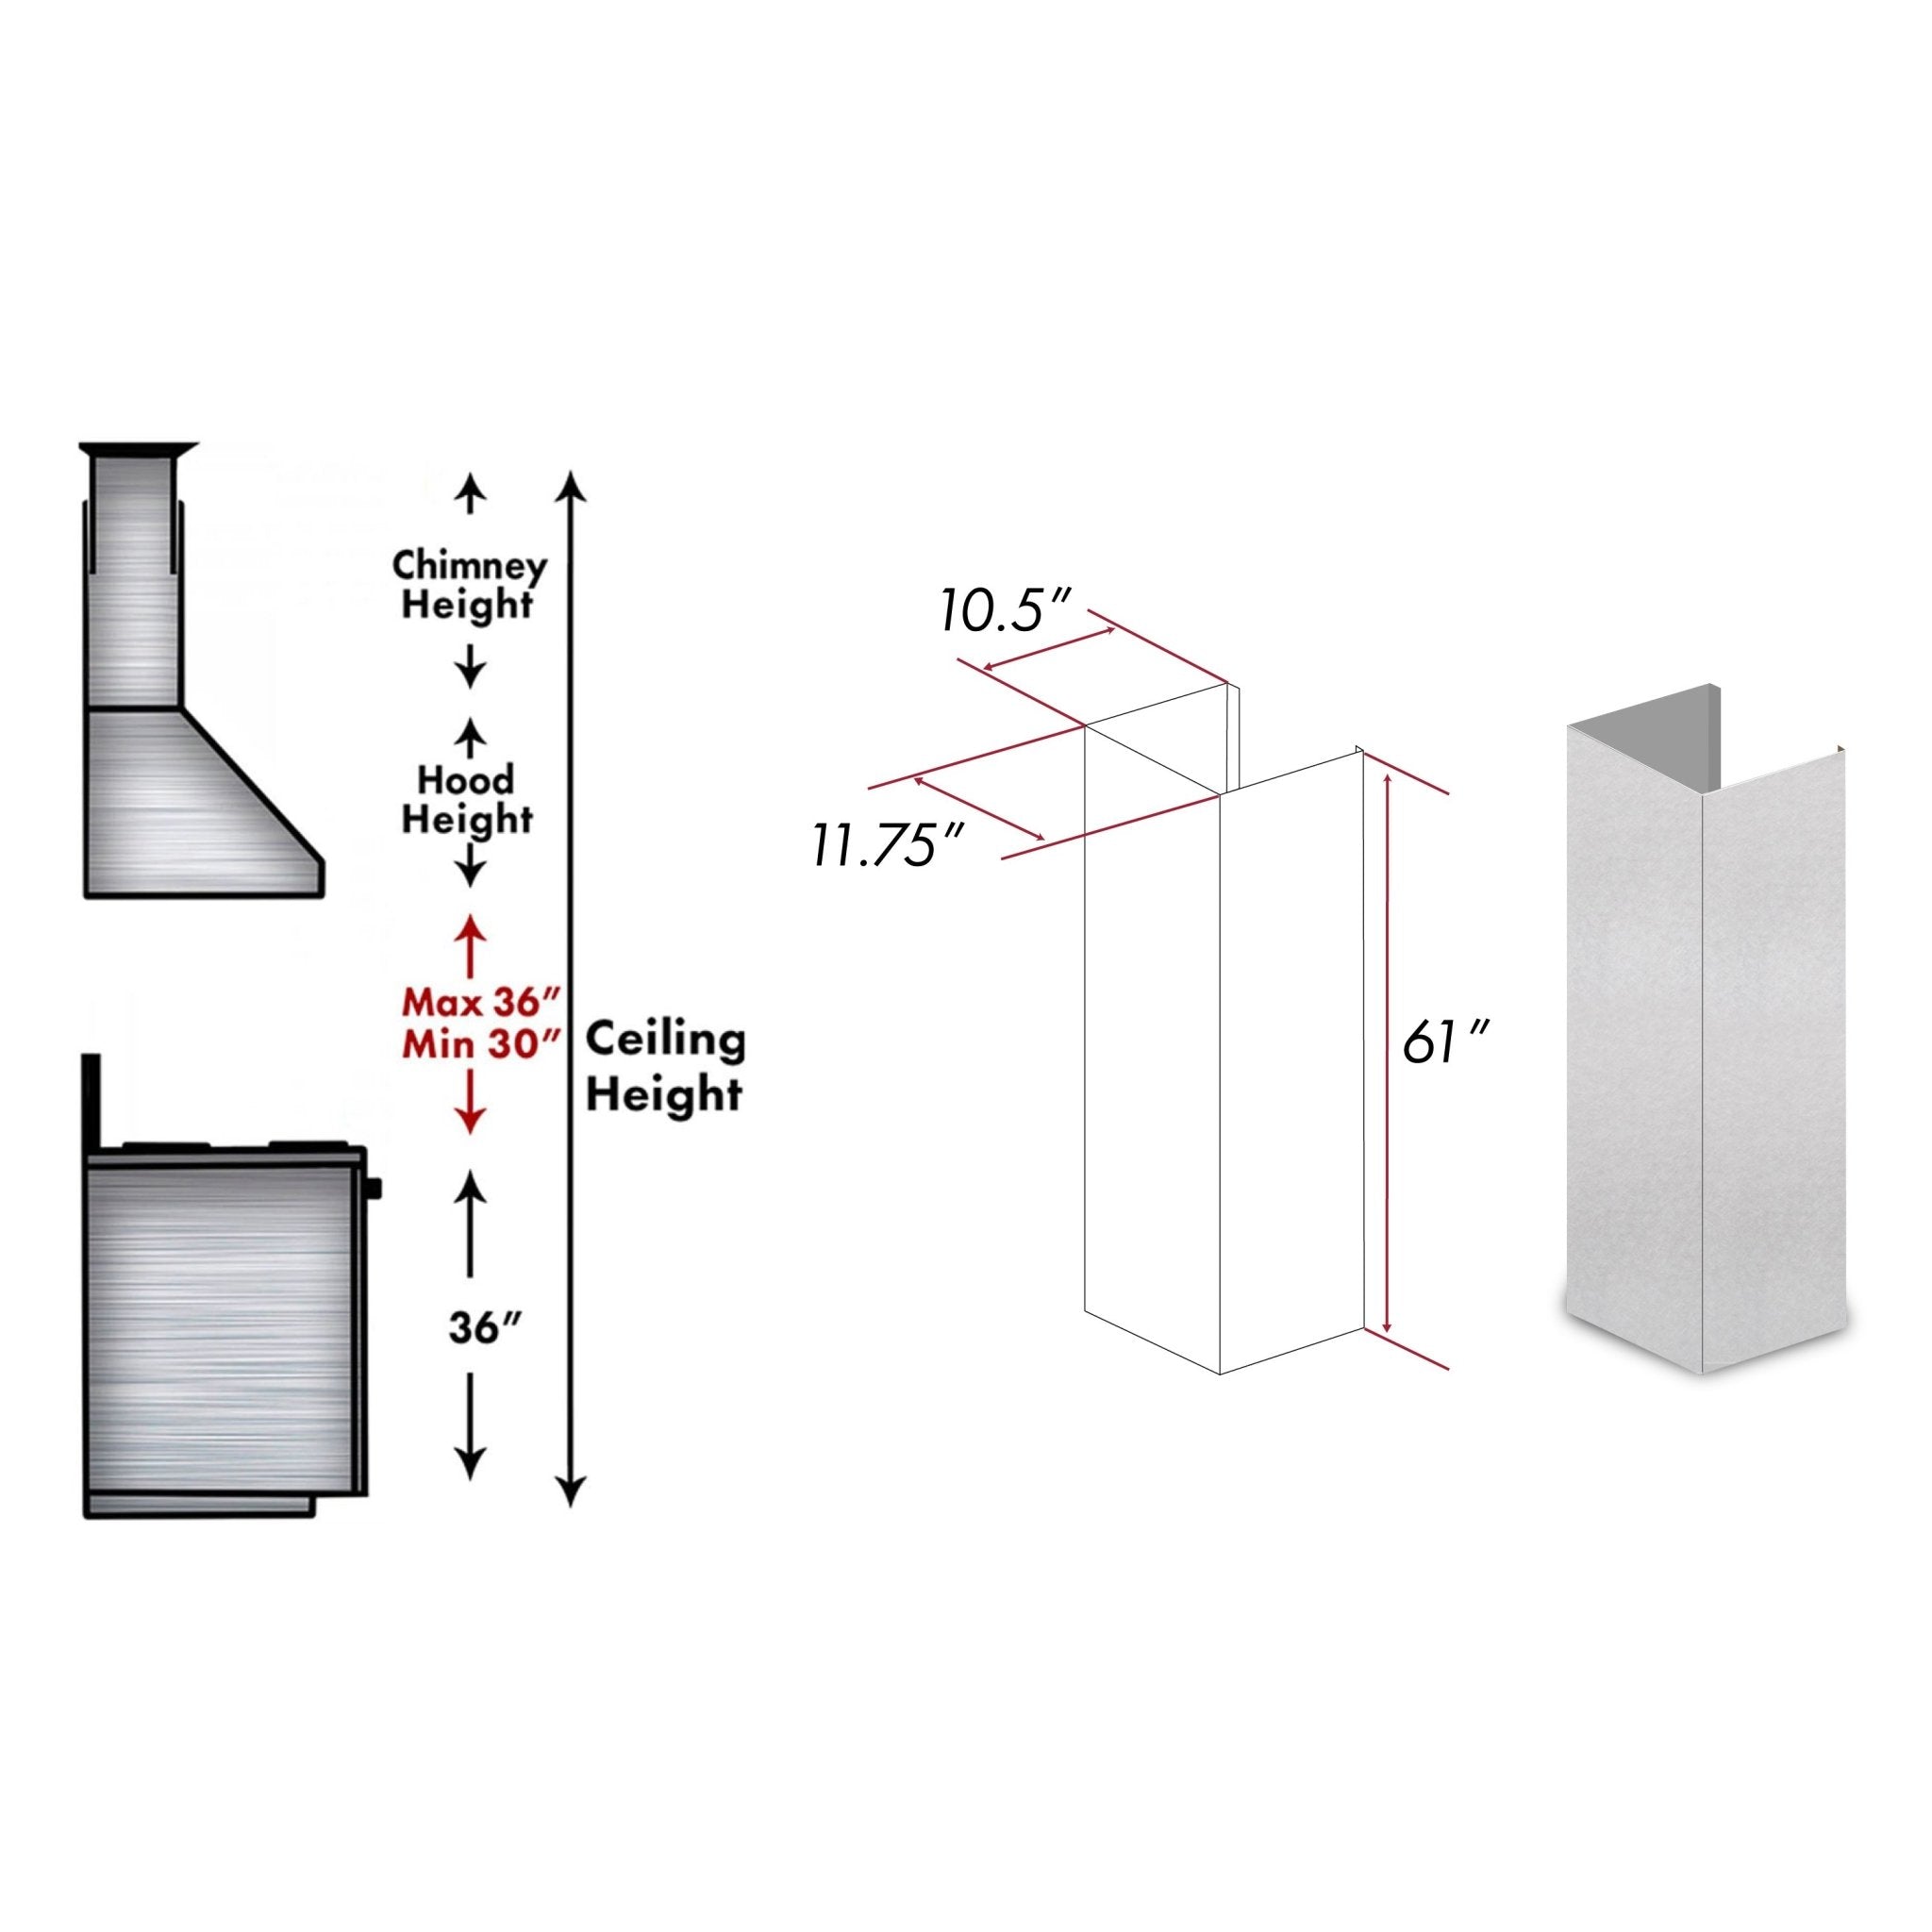 ZLINE 61" Fingerprint Resistant Stainless Steel Chimney Extension for Ceilings up to 12.5 ft. (8KN4S-E)